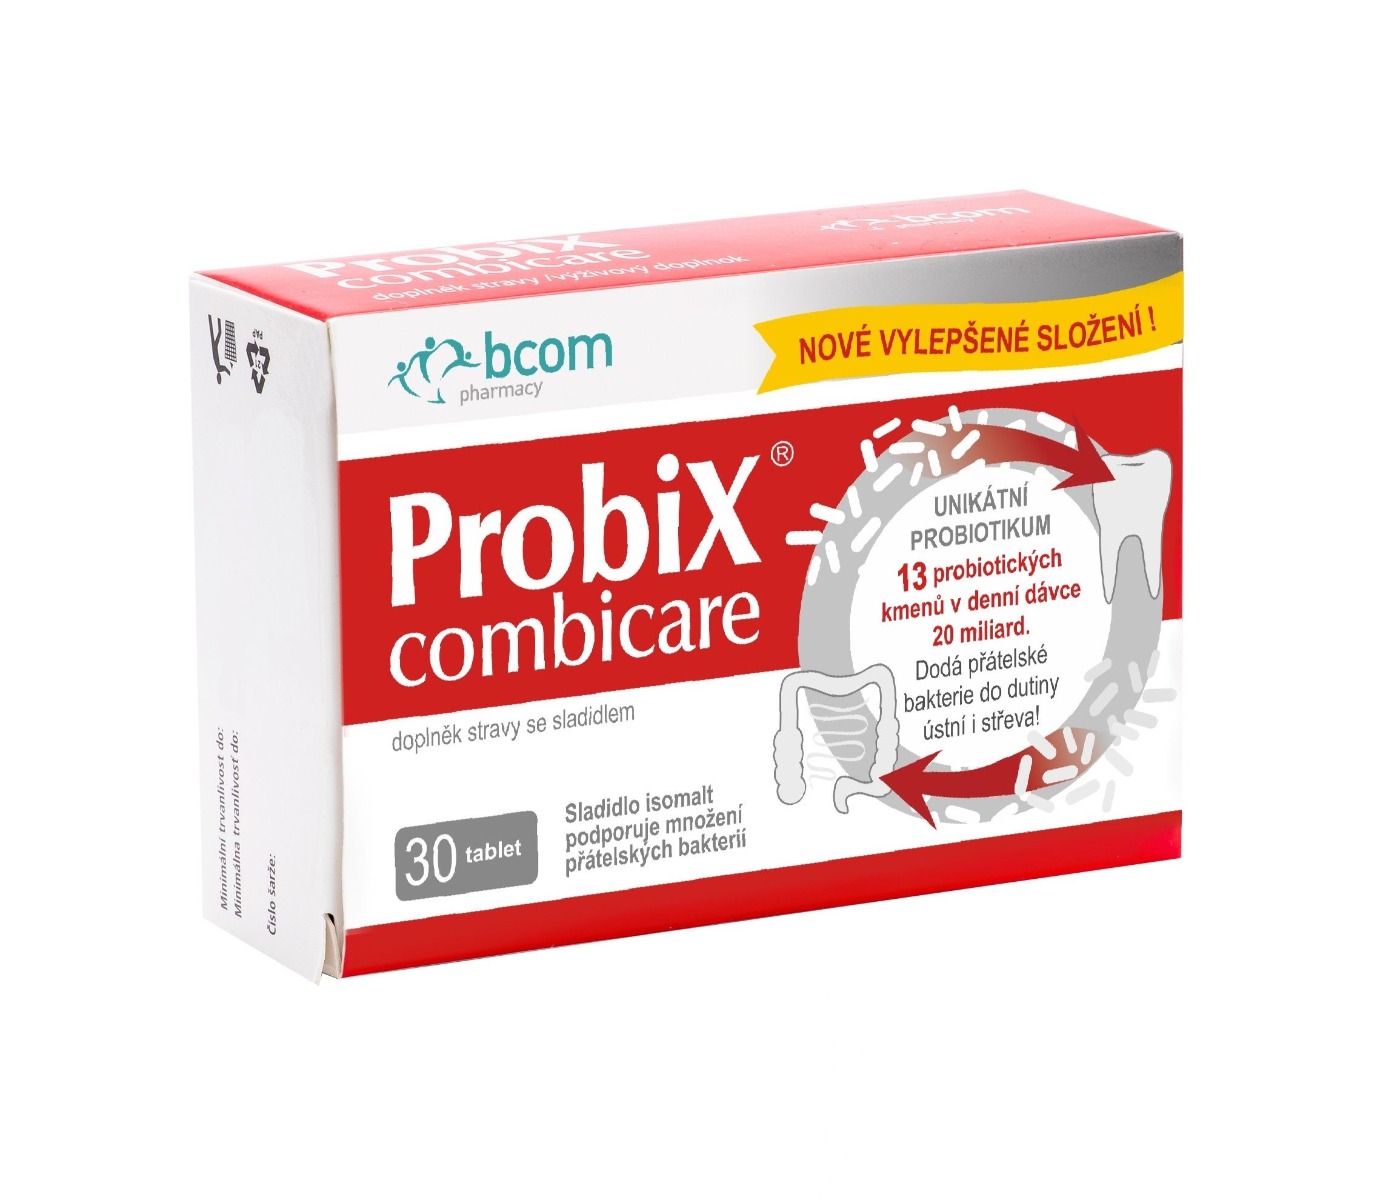 Probix combicare 30 tablet Probix